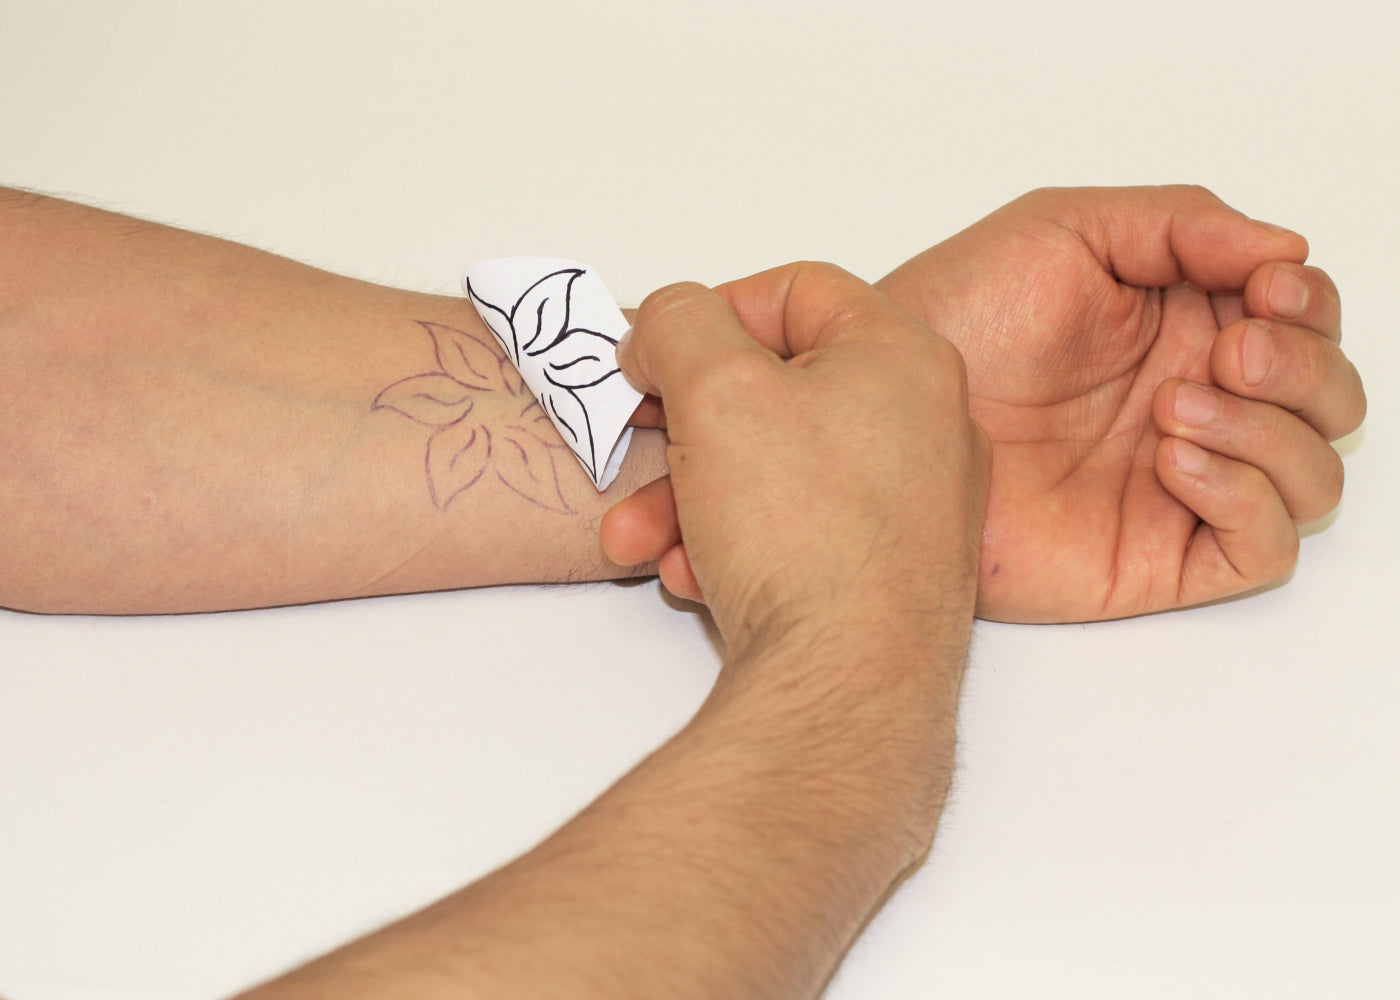 How to make a henna tattoo stencil